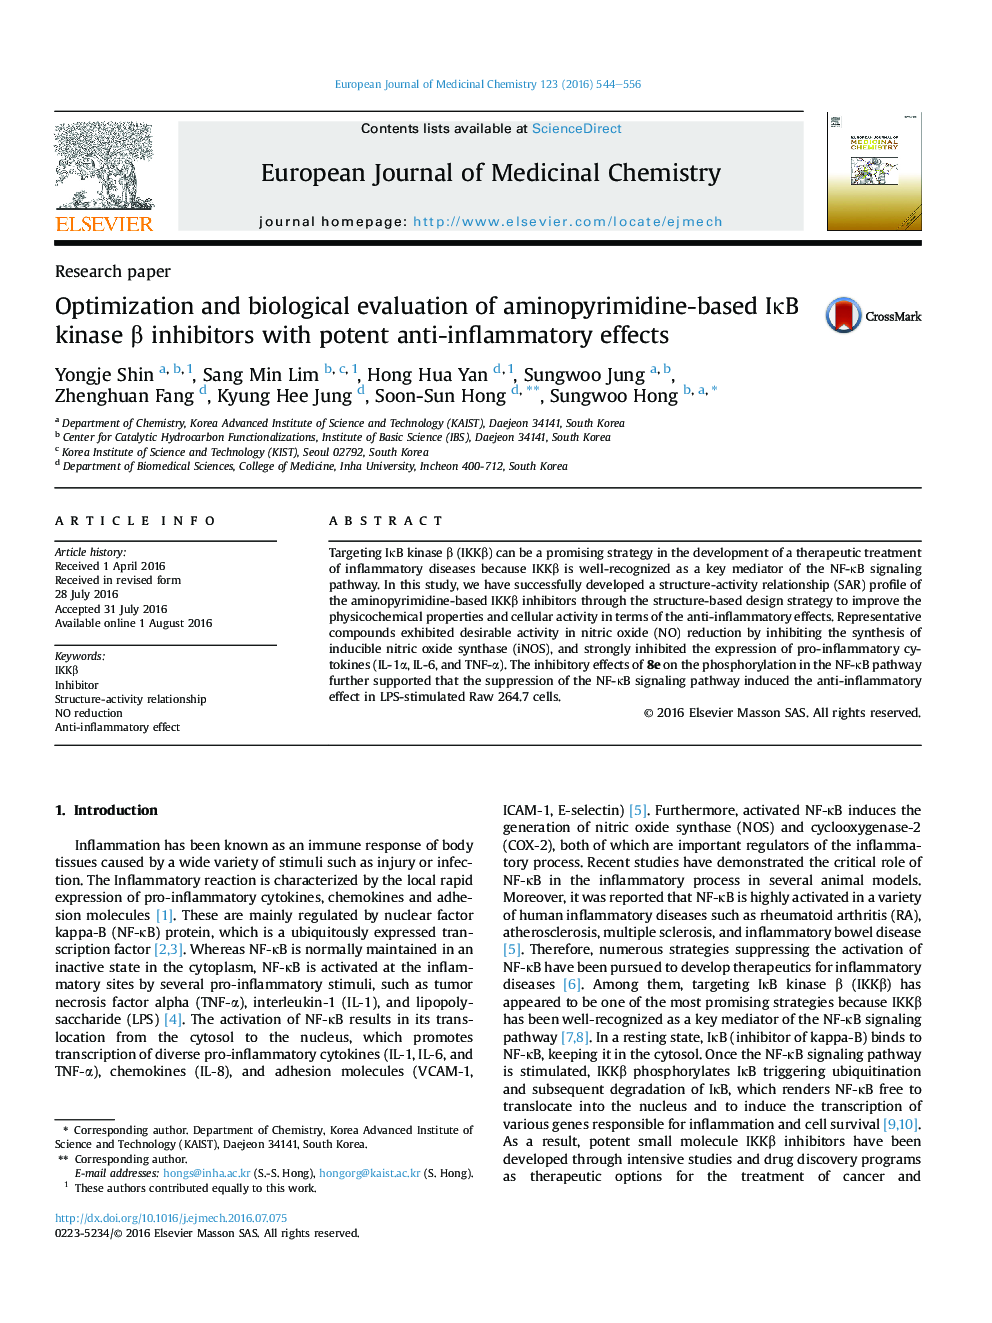 Optimization and biological evaluation of aminopyrimidine-based IÎºB kinase Î² inhibitors with potent anti-inflammatory effects